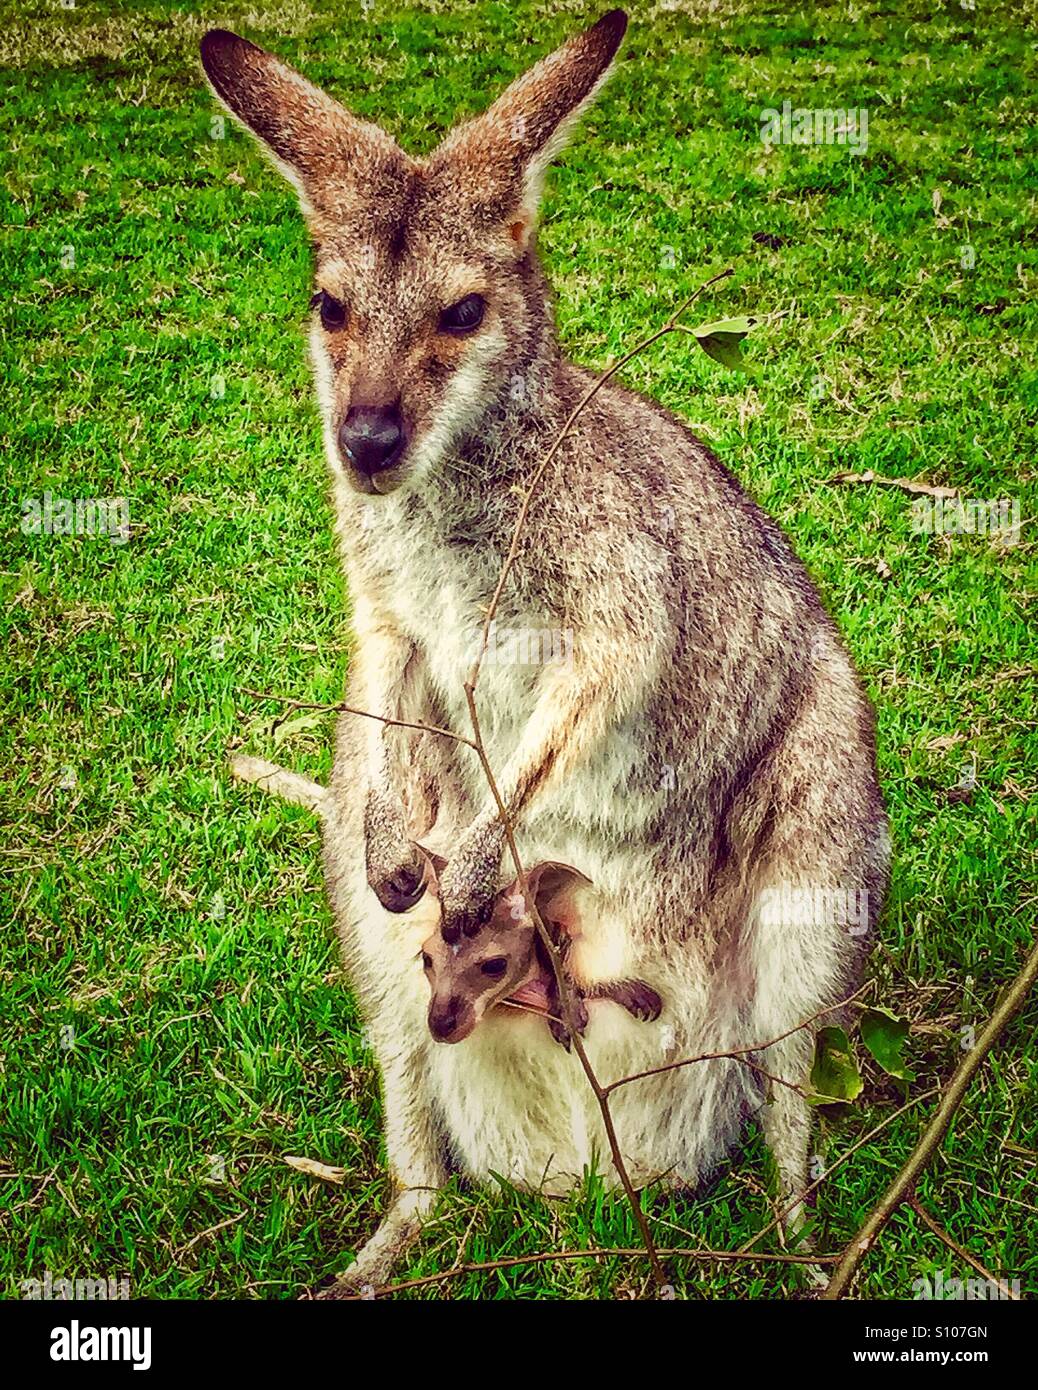 Mother kangaroo carrying baby kangaroo in the pouch Stock Photo - Alamy